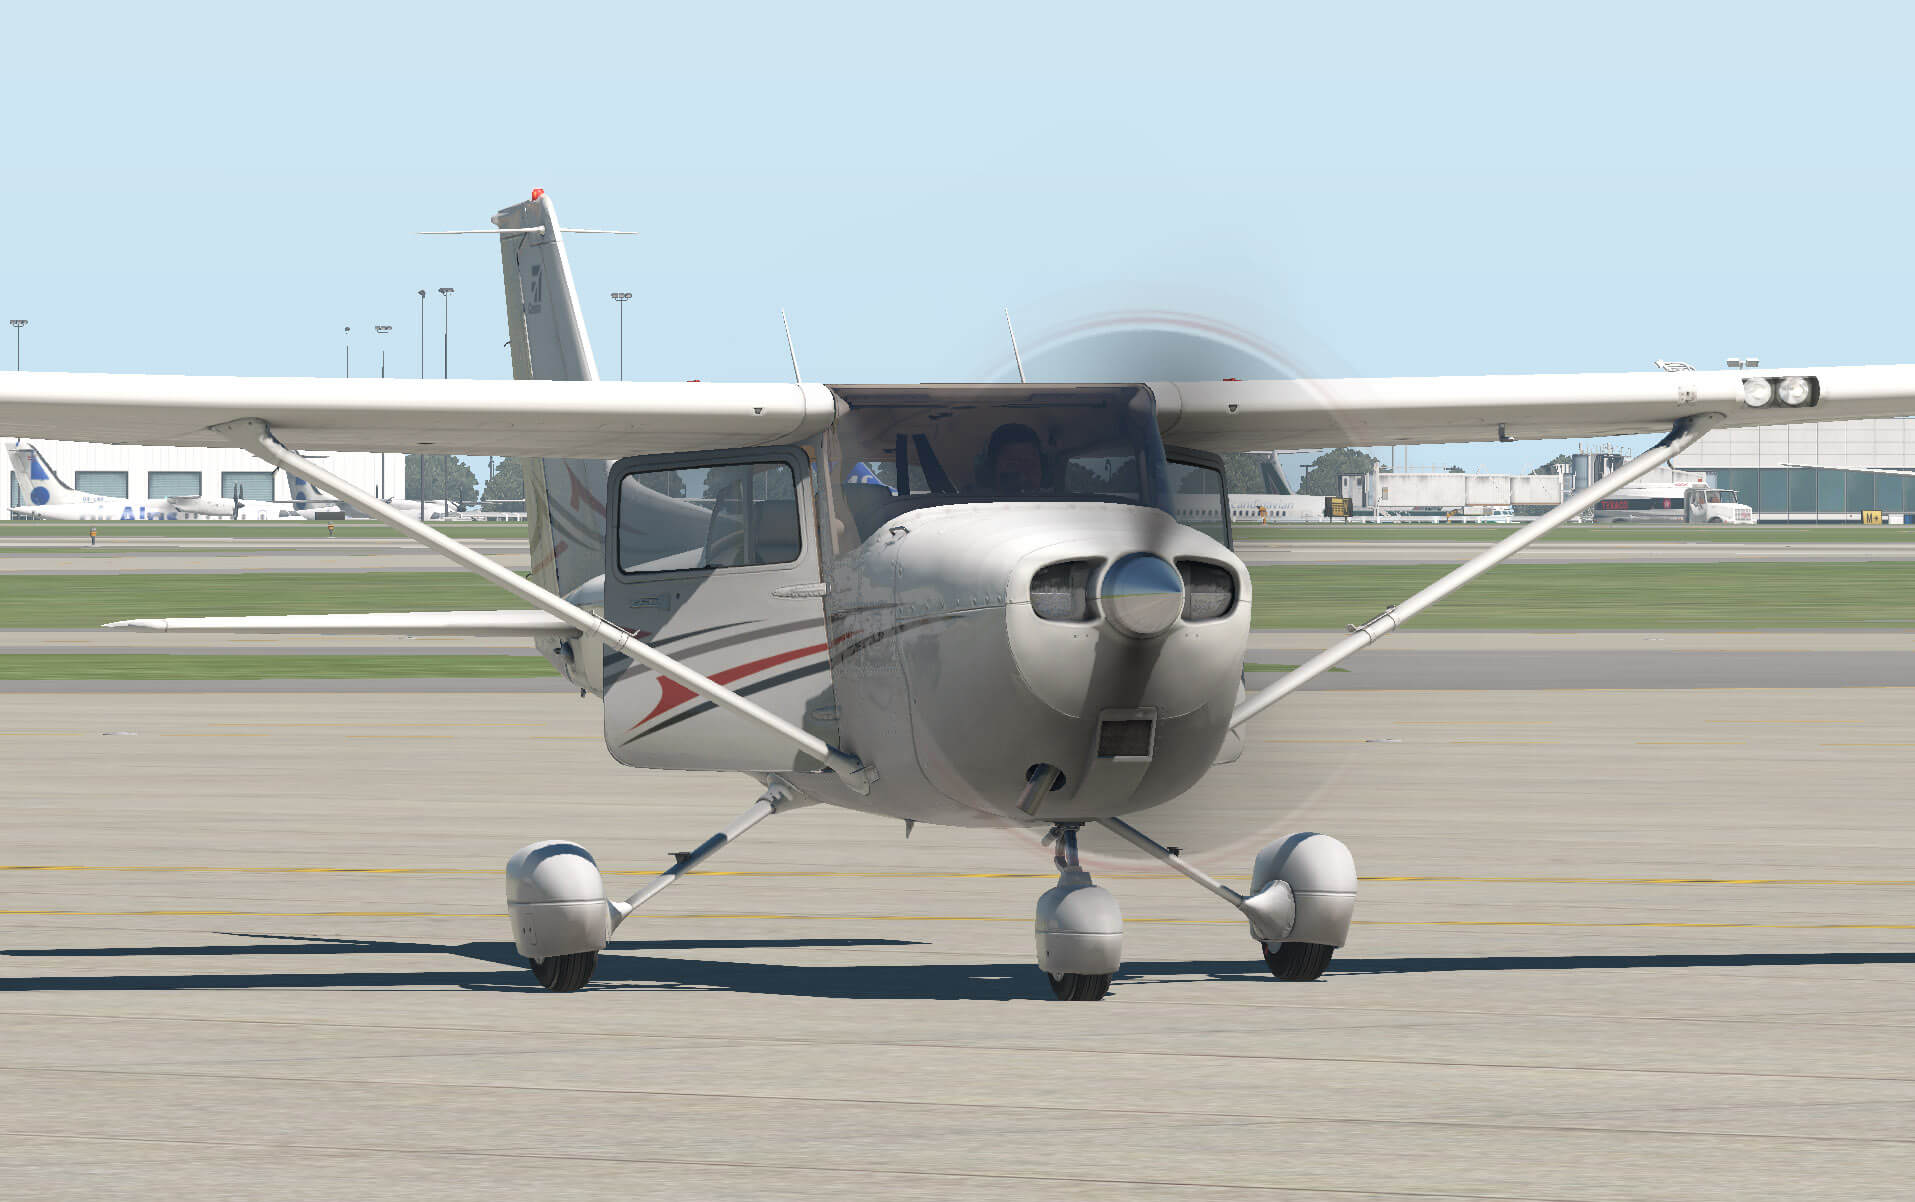 X-plane 11 requirements